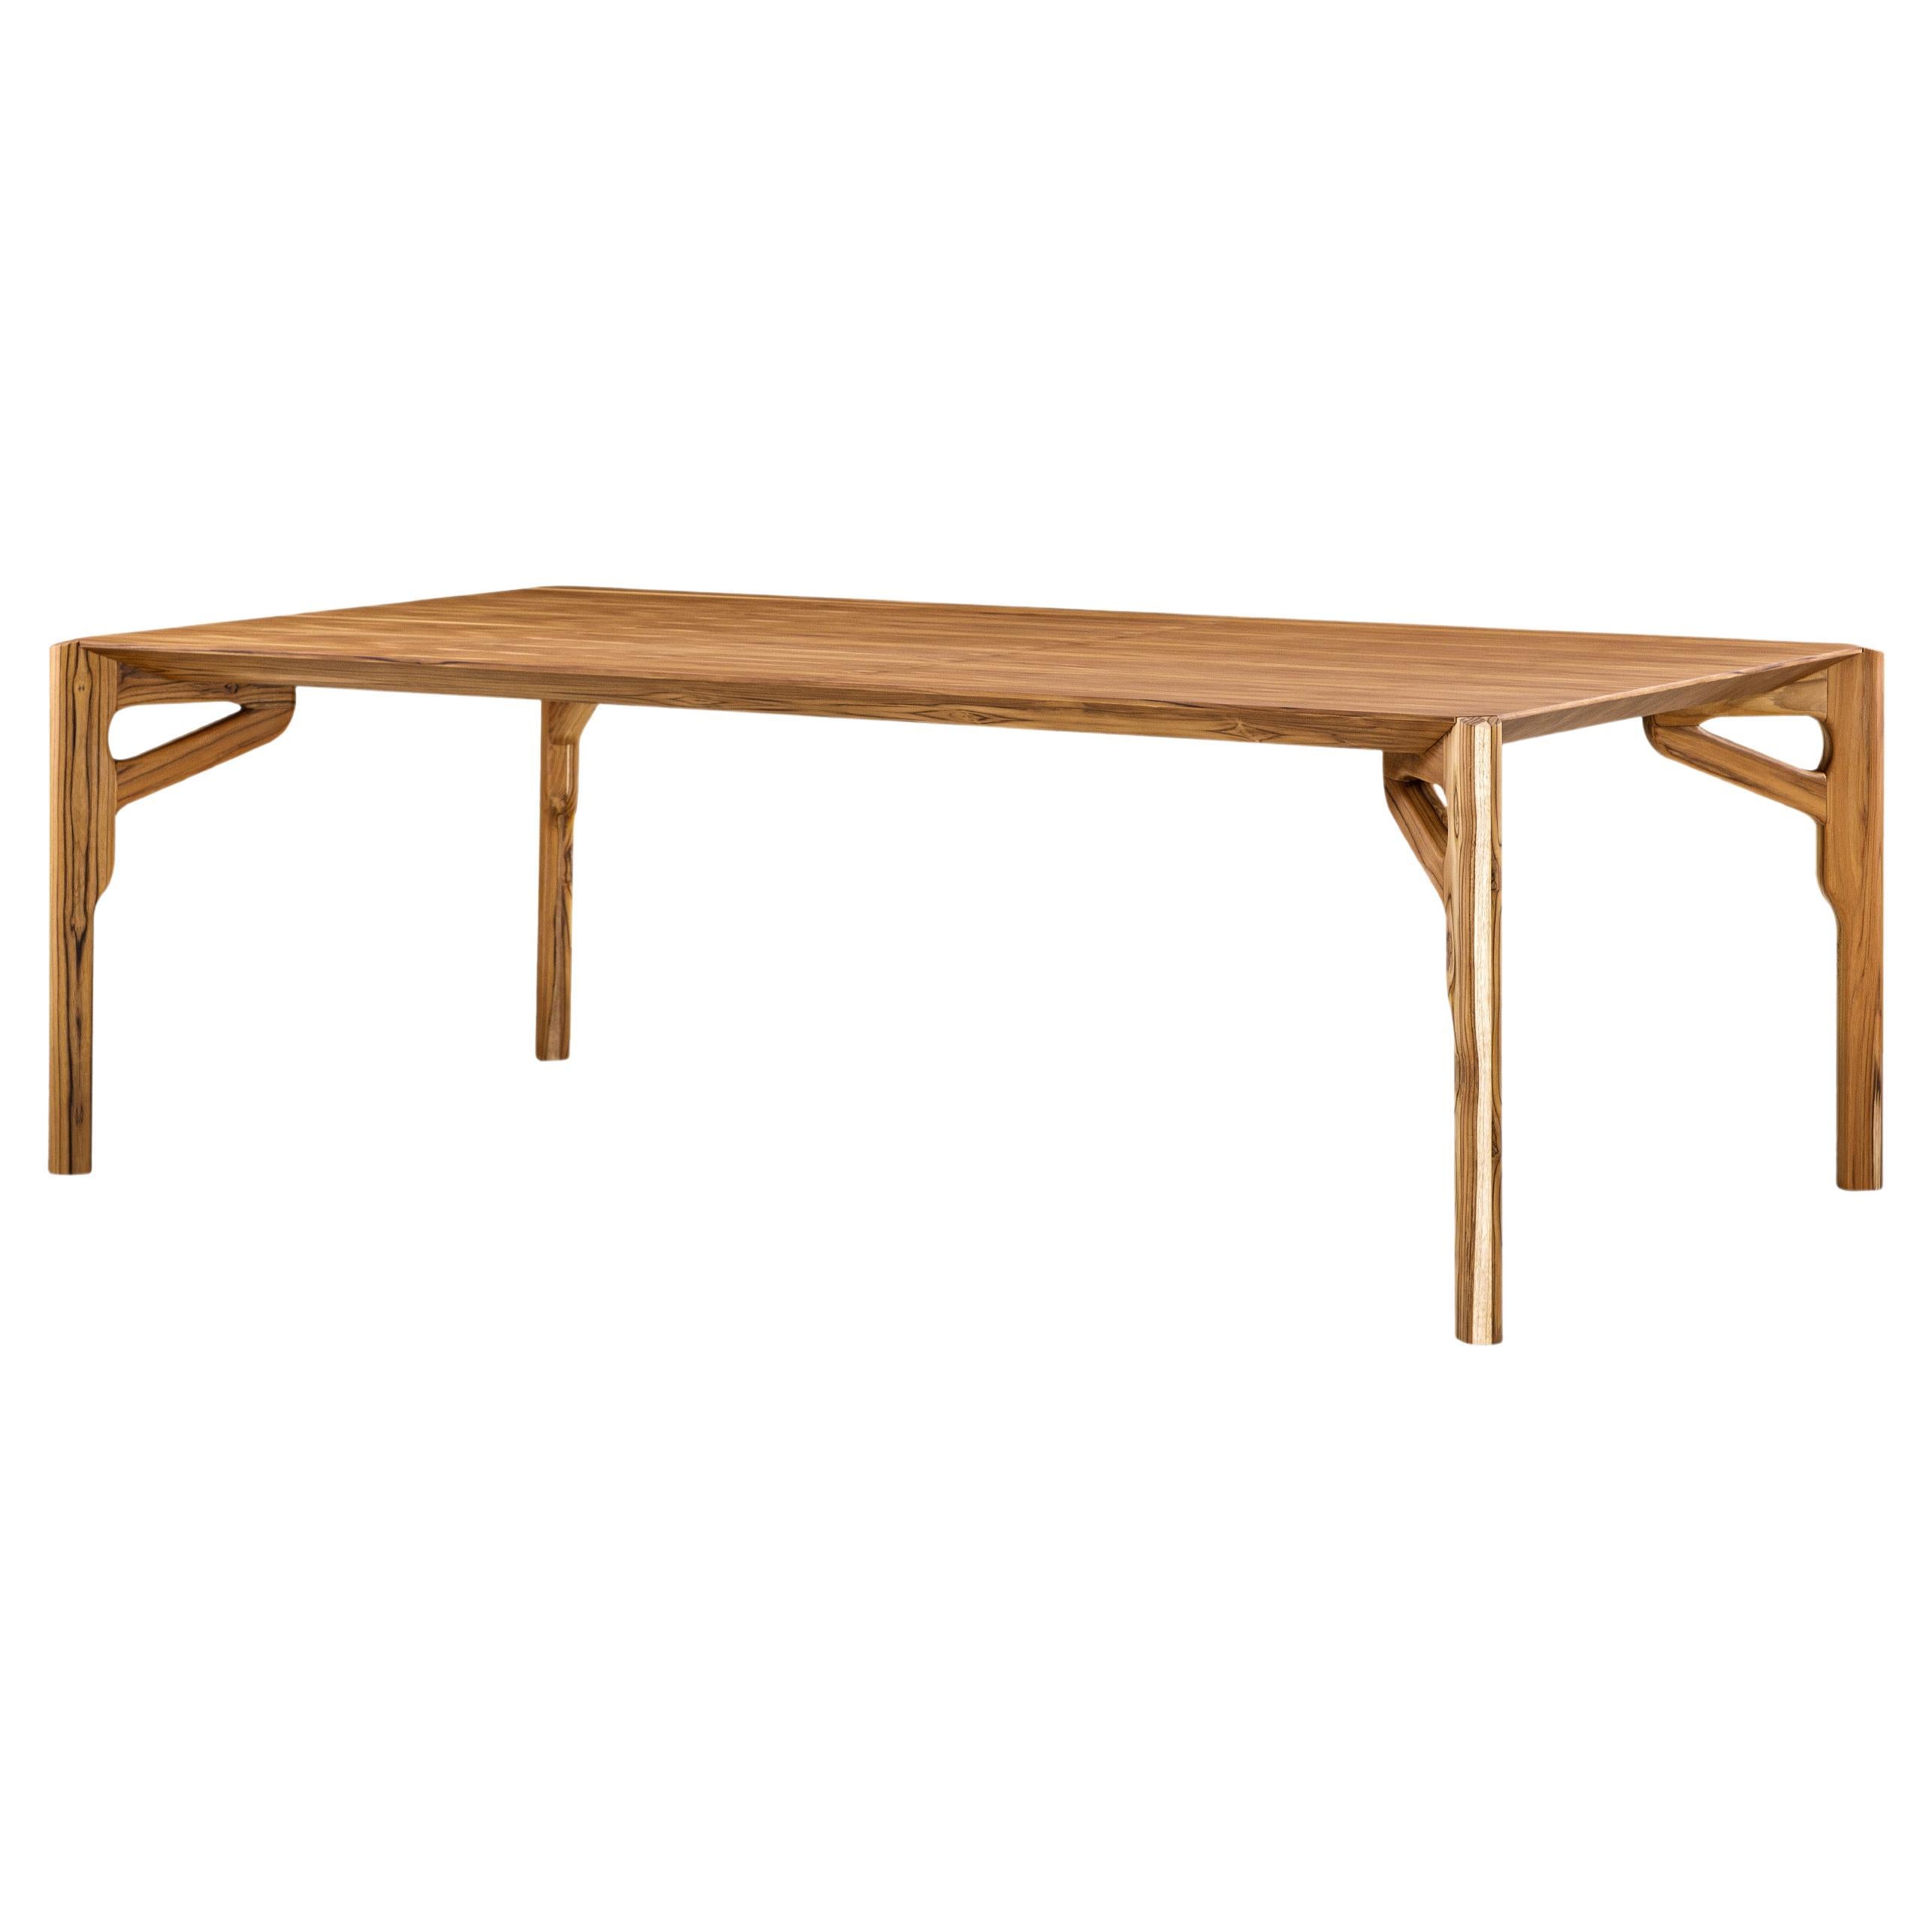 Hawk Dining Table with a Teak Wood Veneered Table Top 86''